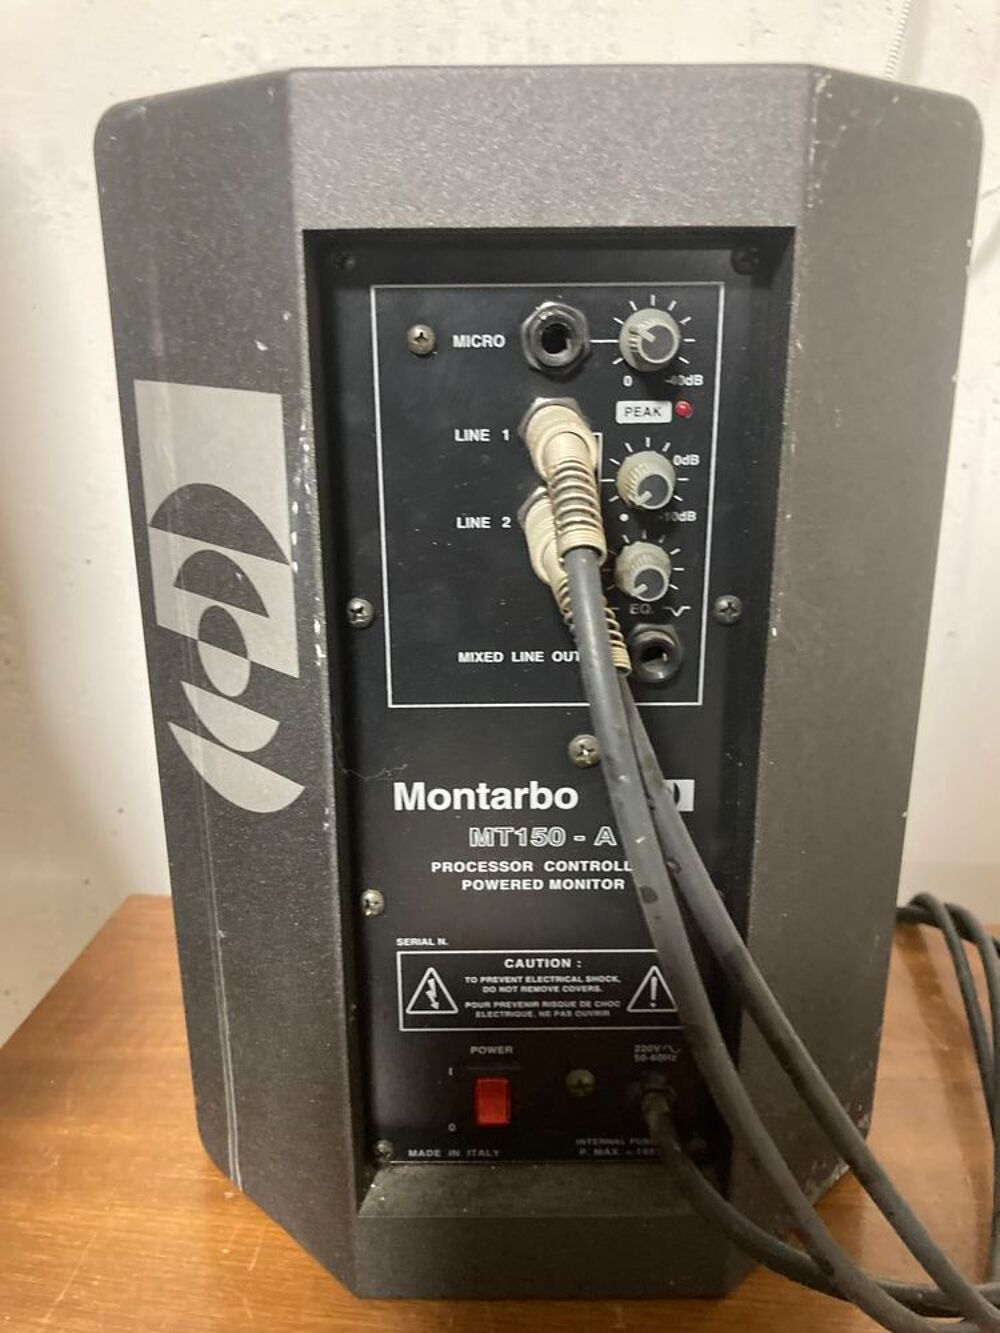 Enceintes MONTARBO MT 150
Audio et hifi